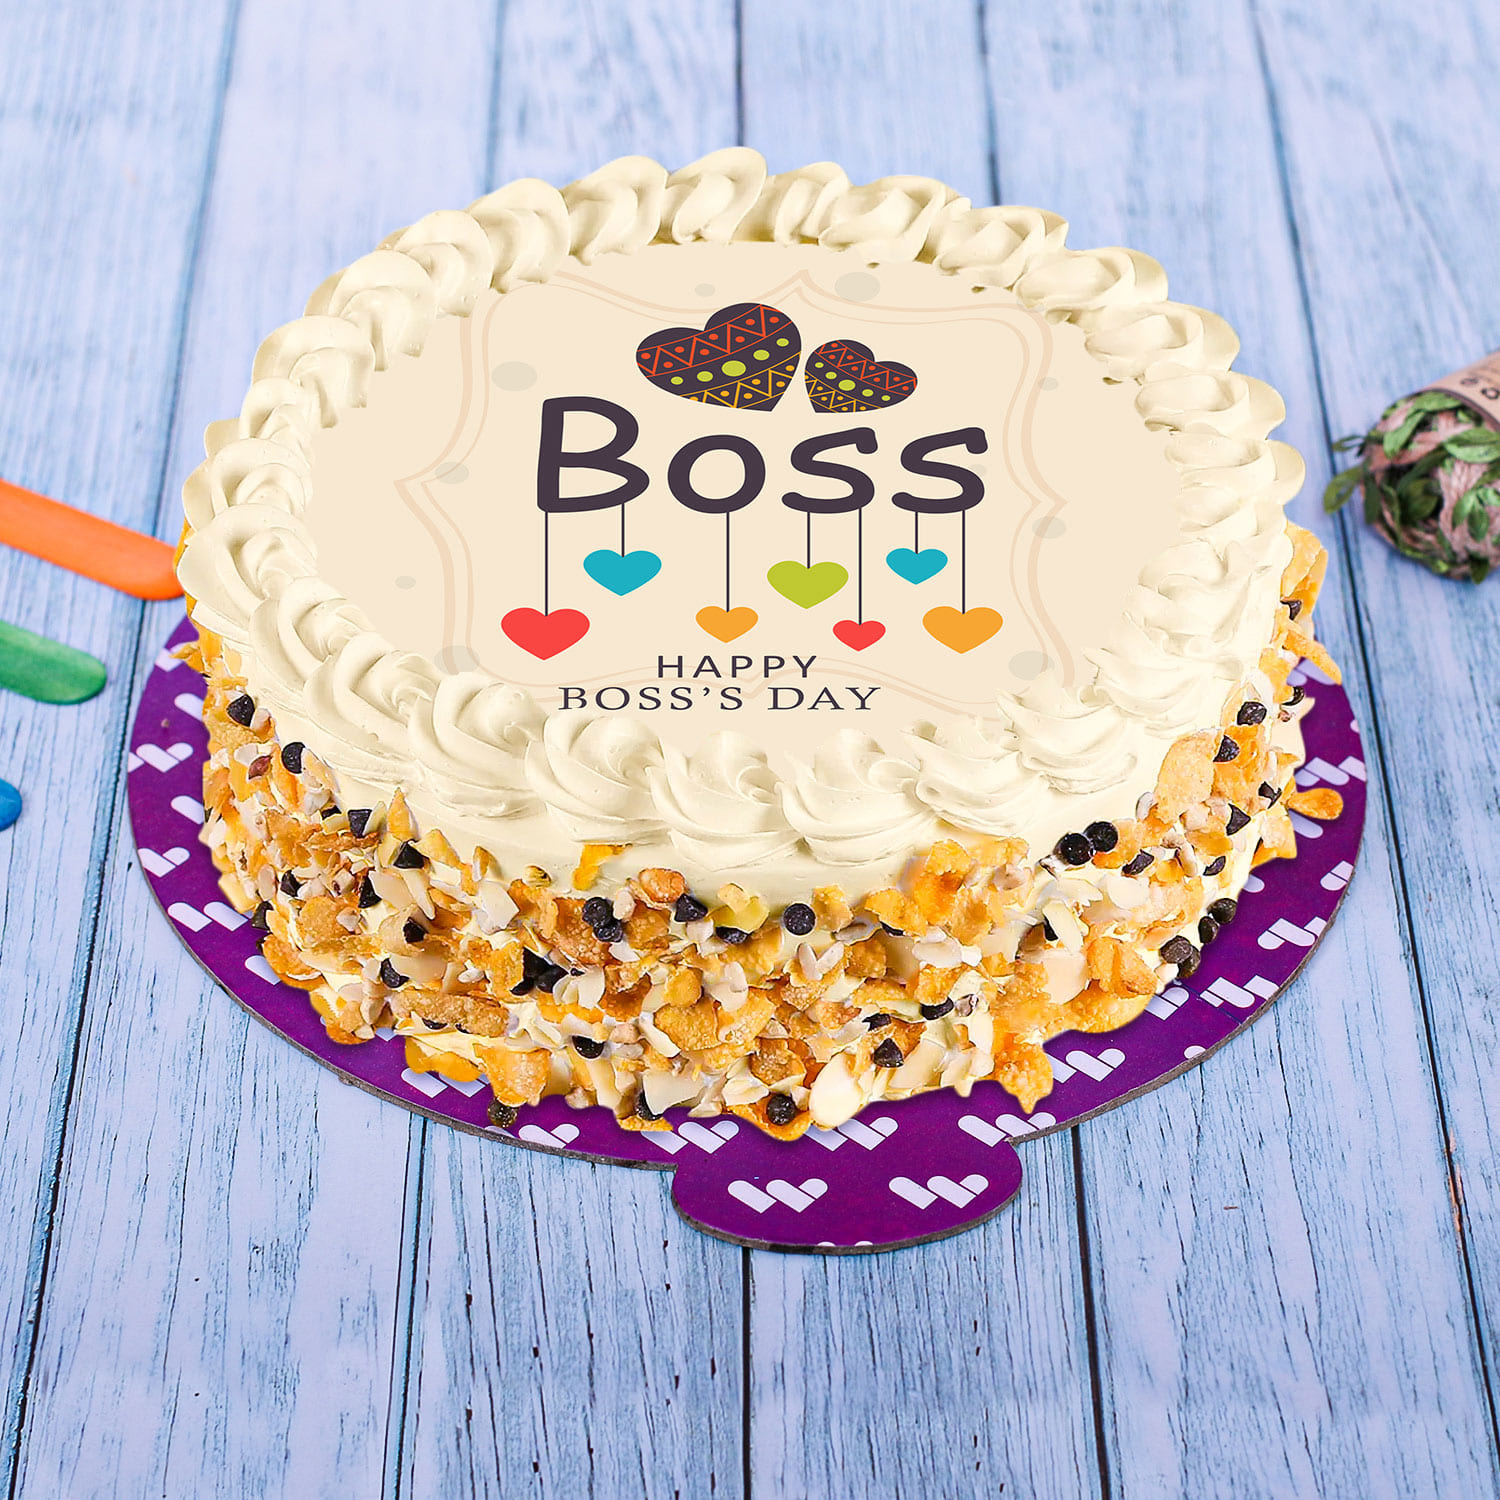 Buy/Send Boss Birthday Butterscotch Cake Online @ Rs. 1499 - SendBestGift